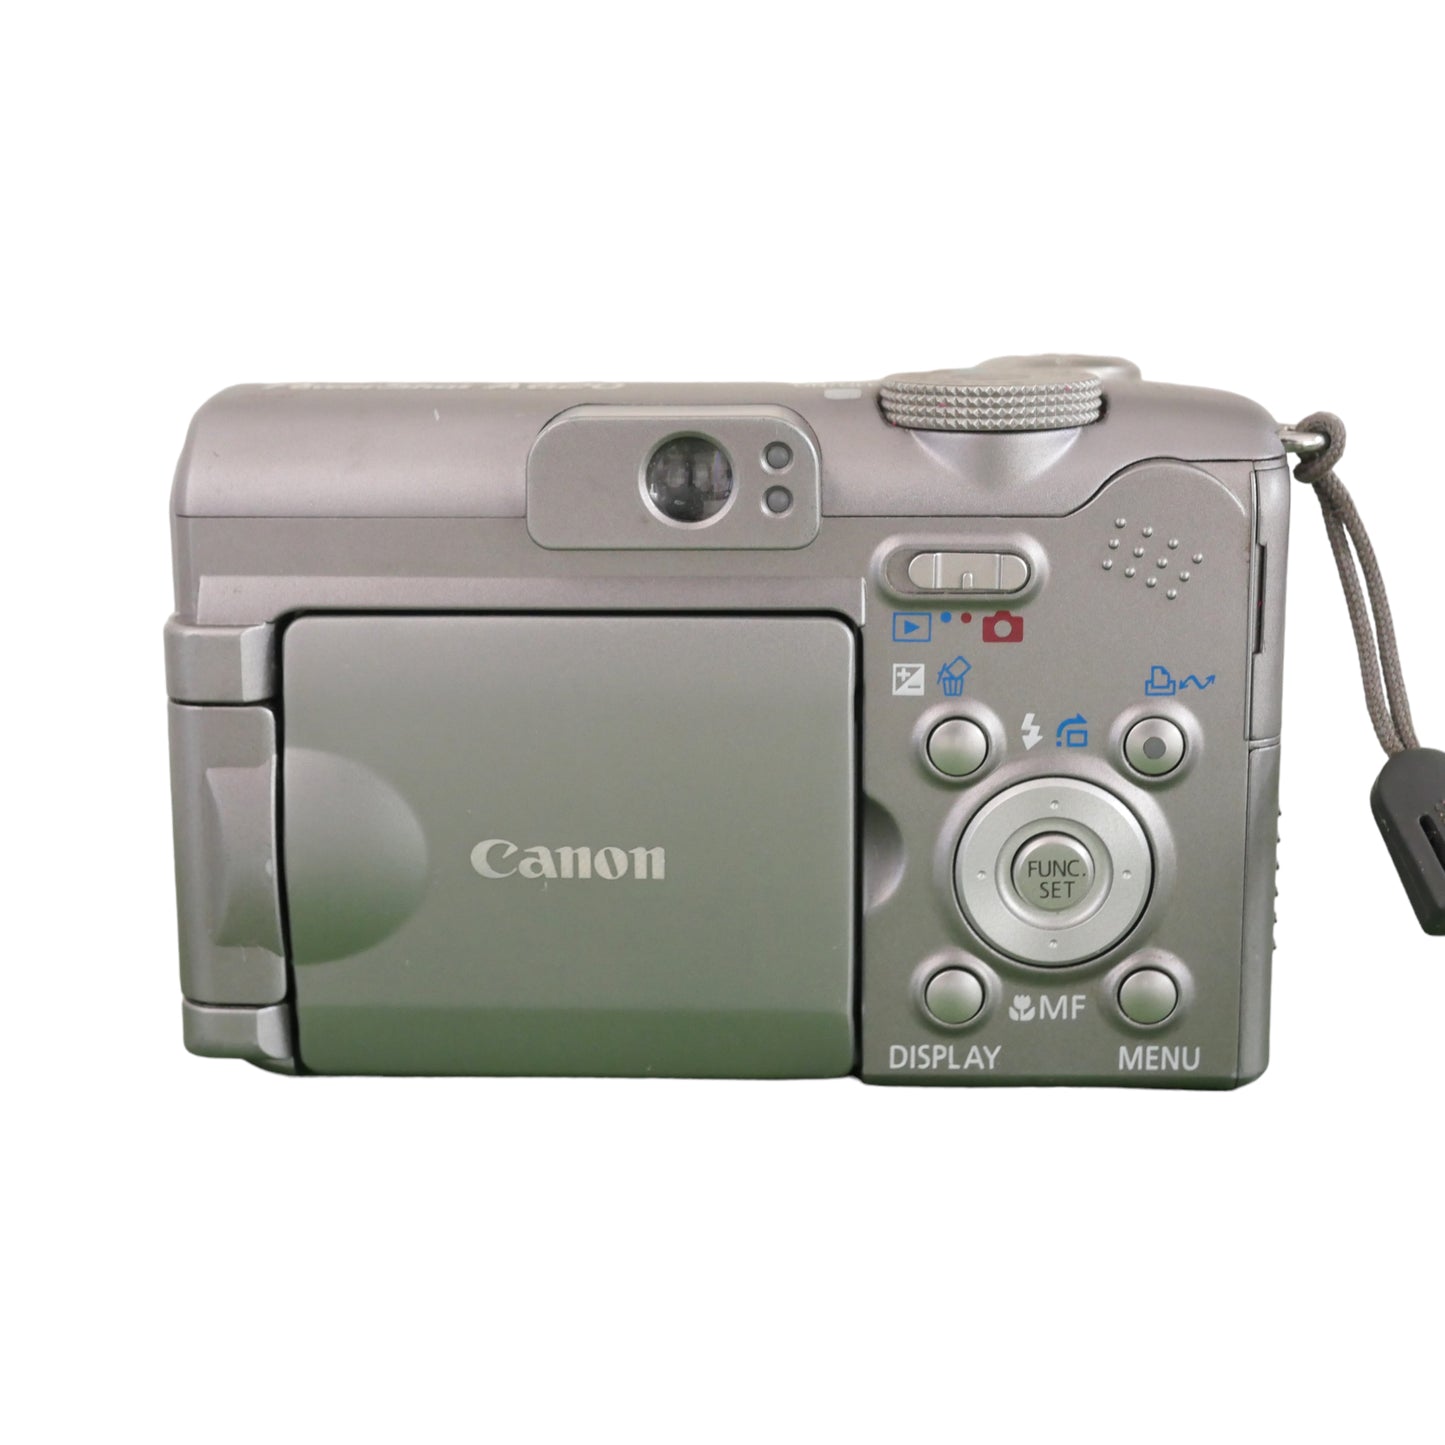 Canon Powershot A620 - 7.1 Megapixel Digital Camera